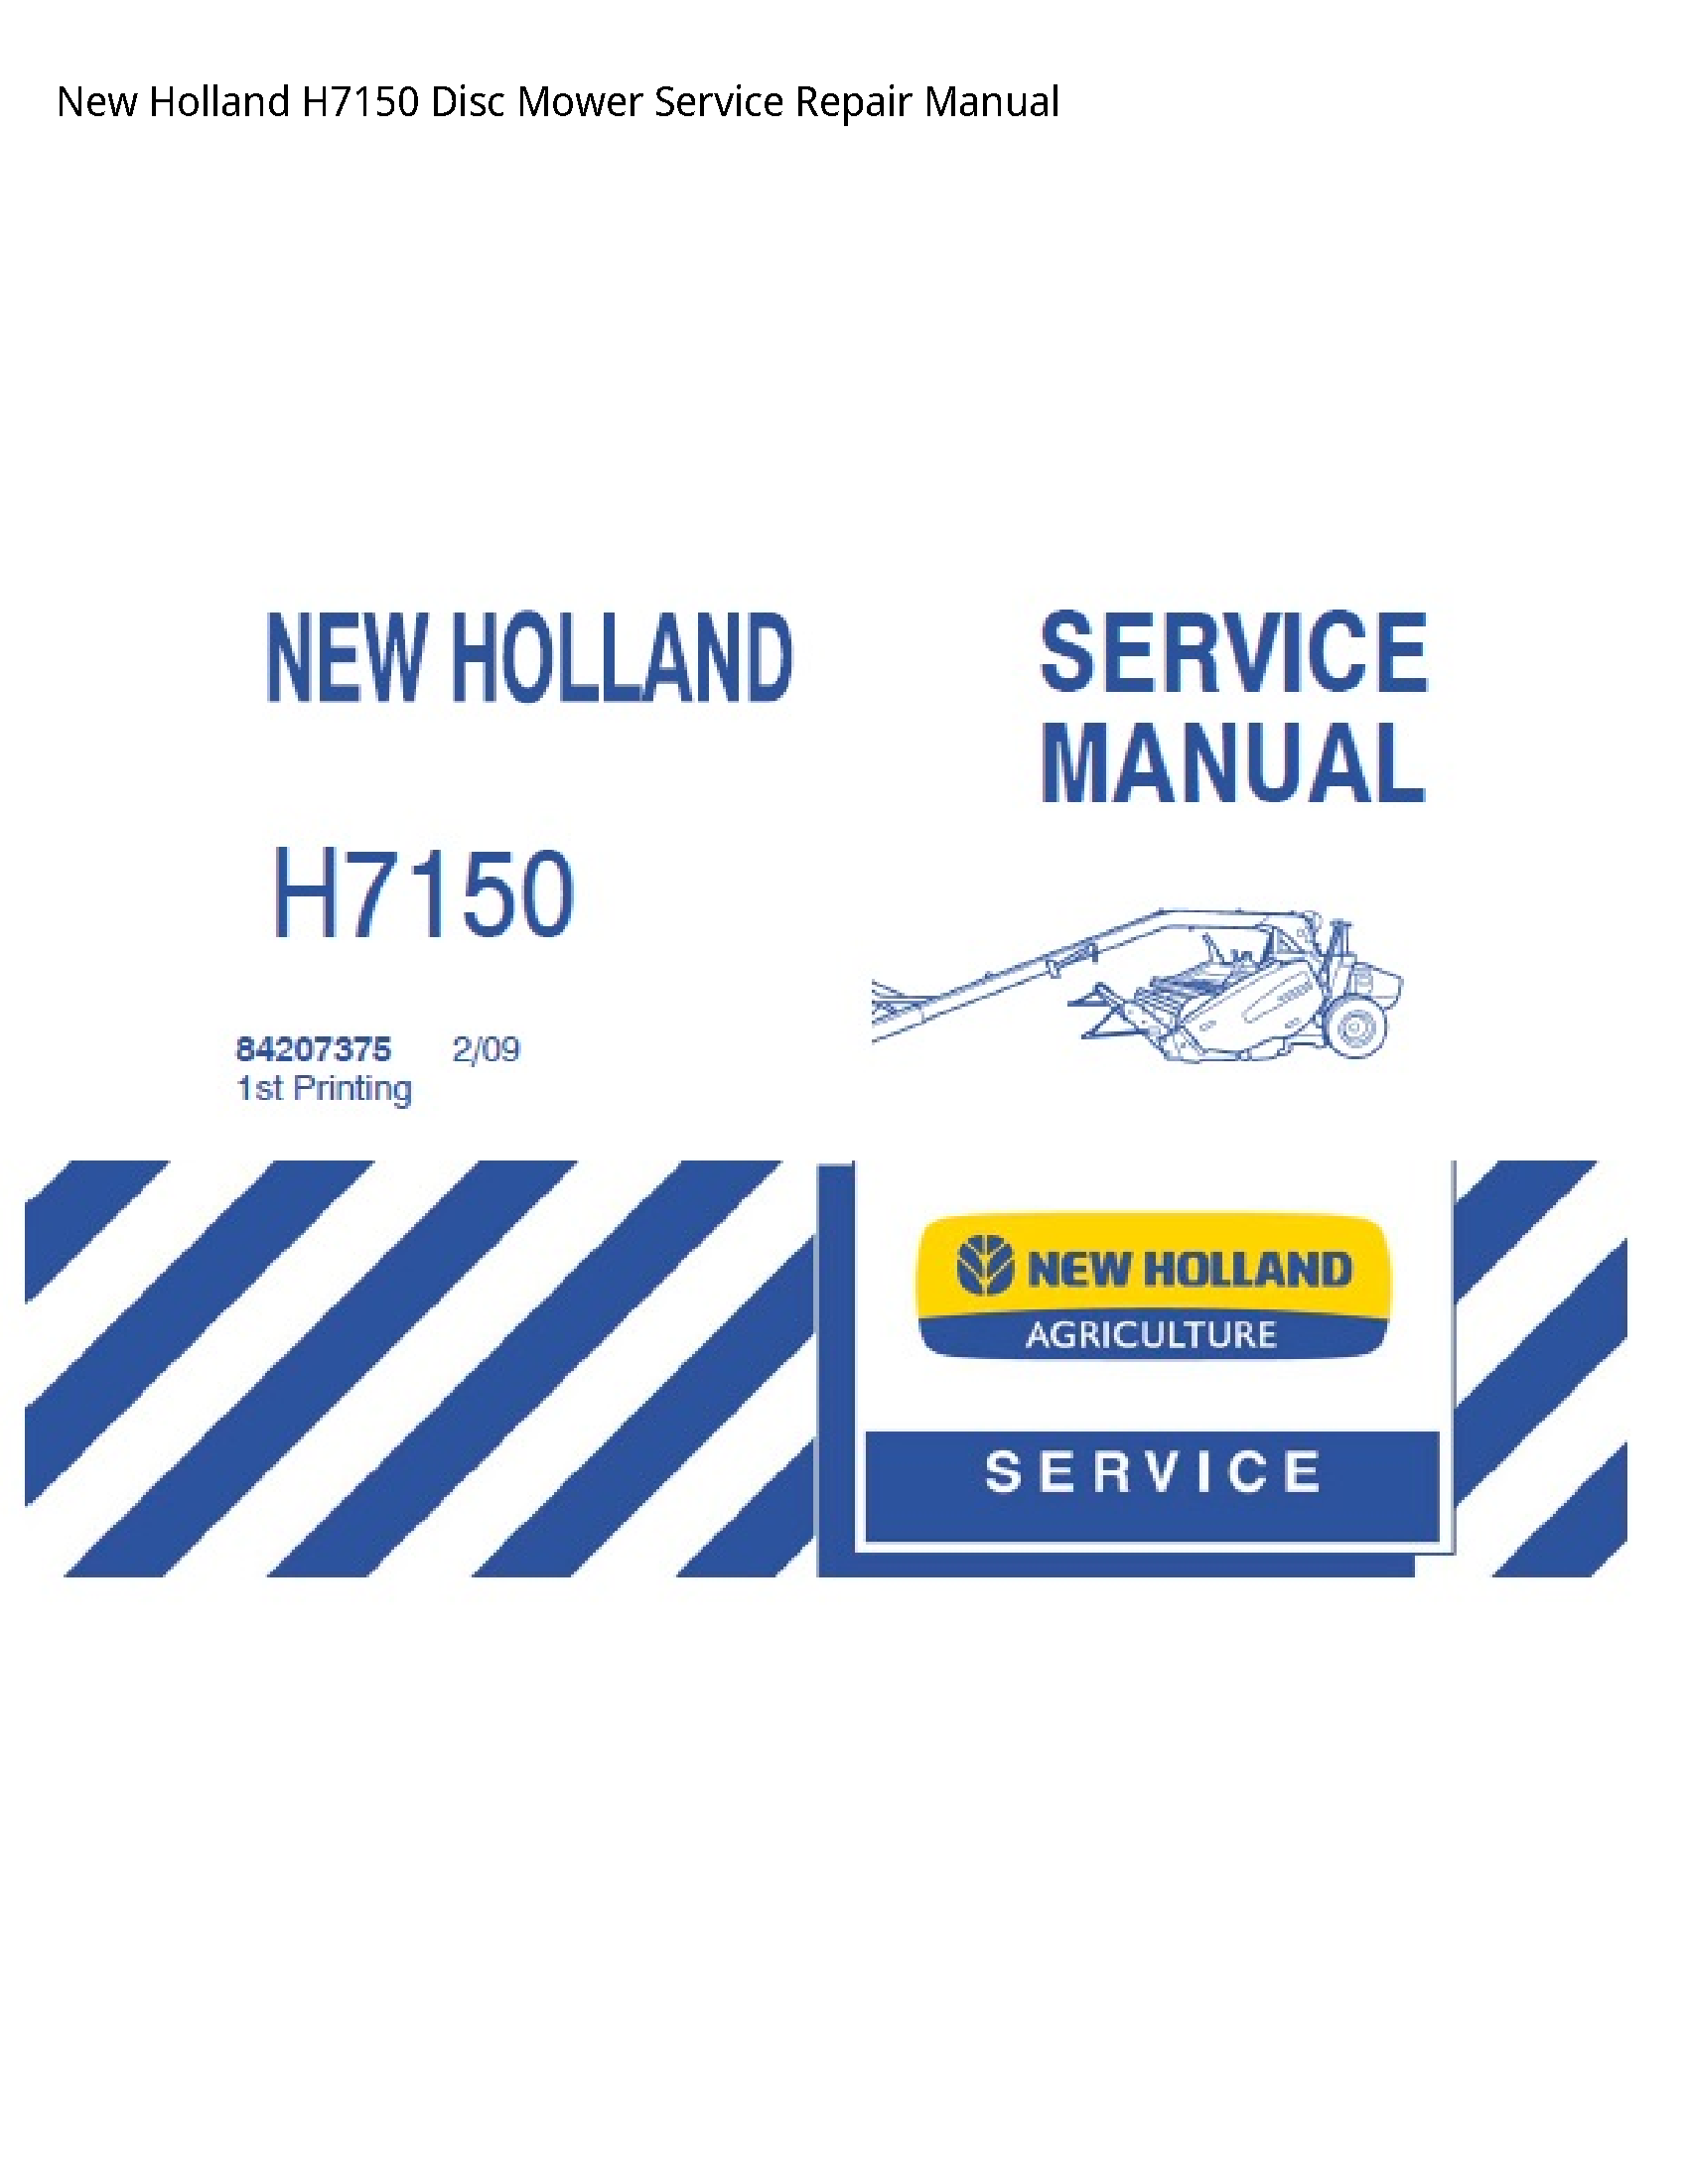 New Holland H7150 Disc Mower manual